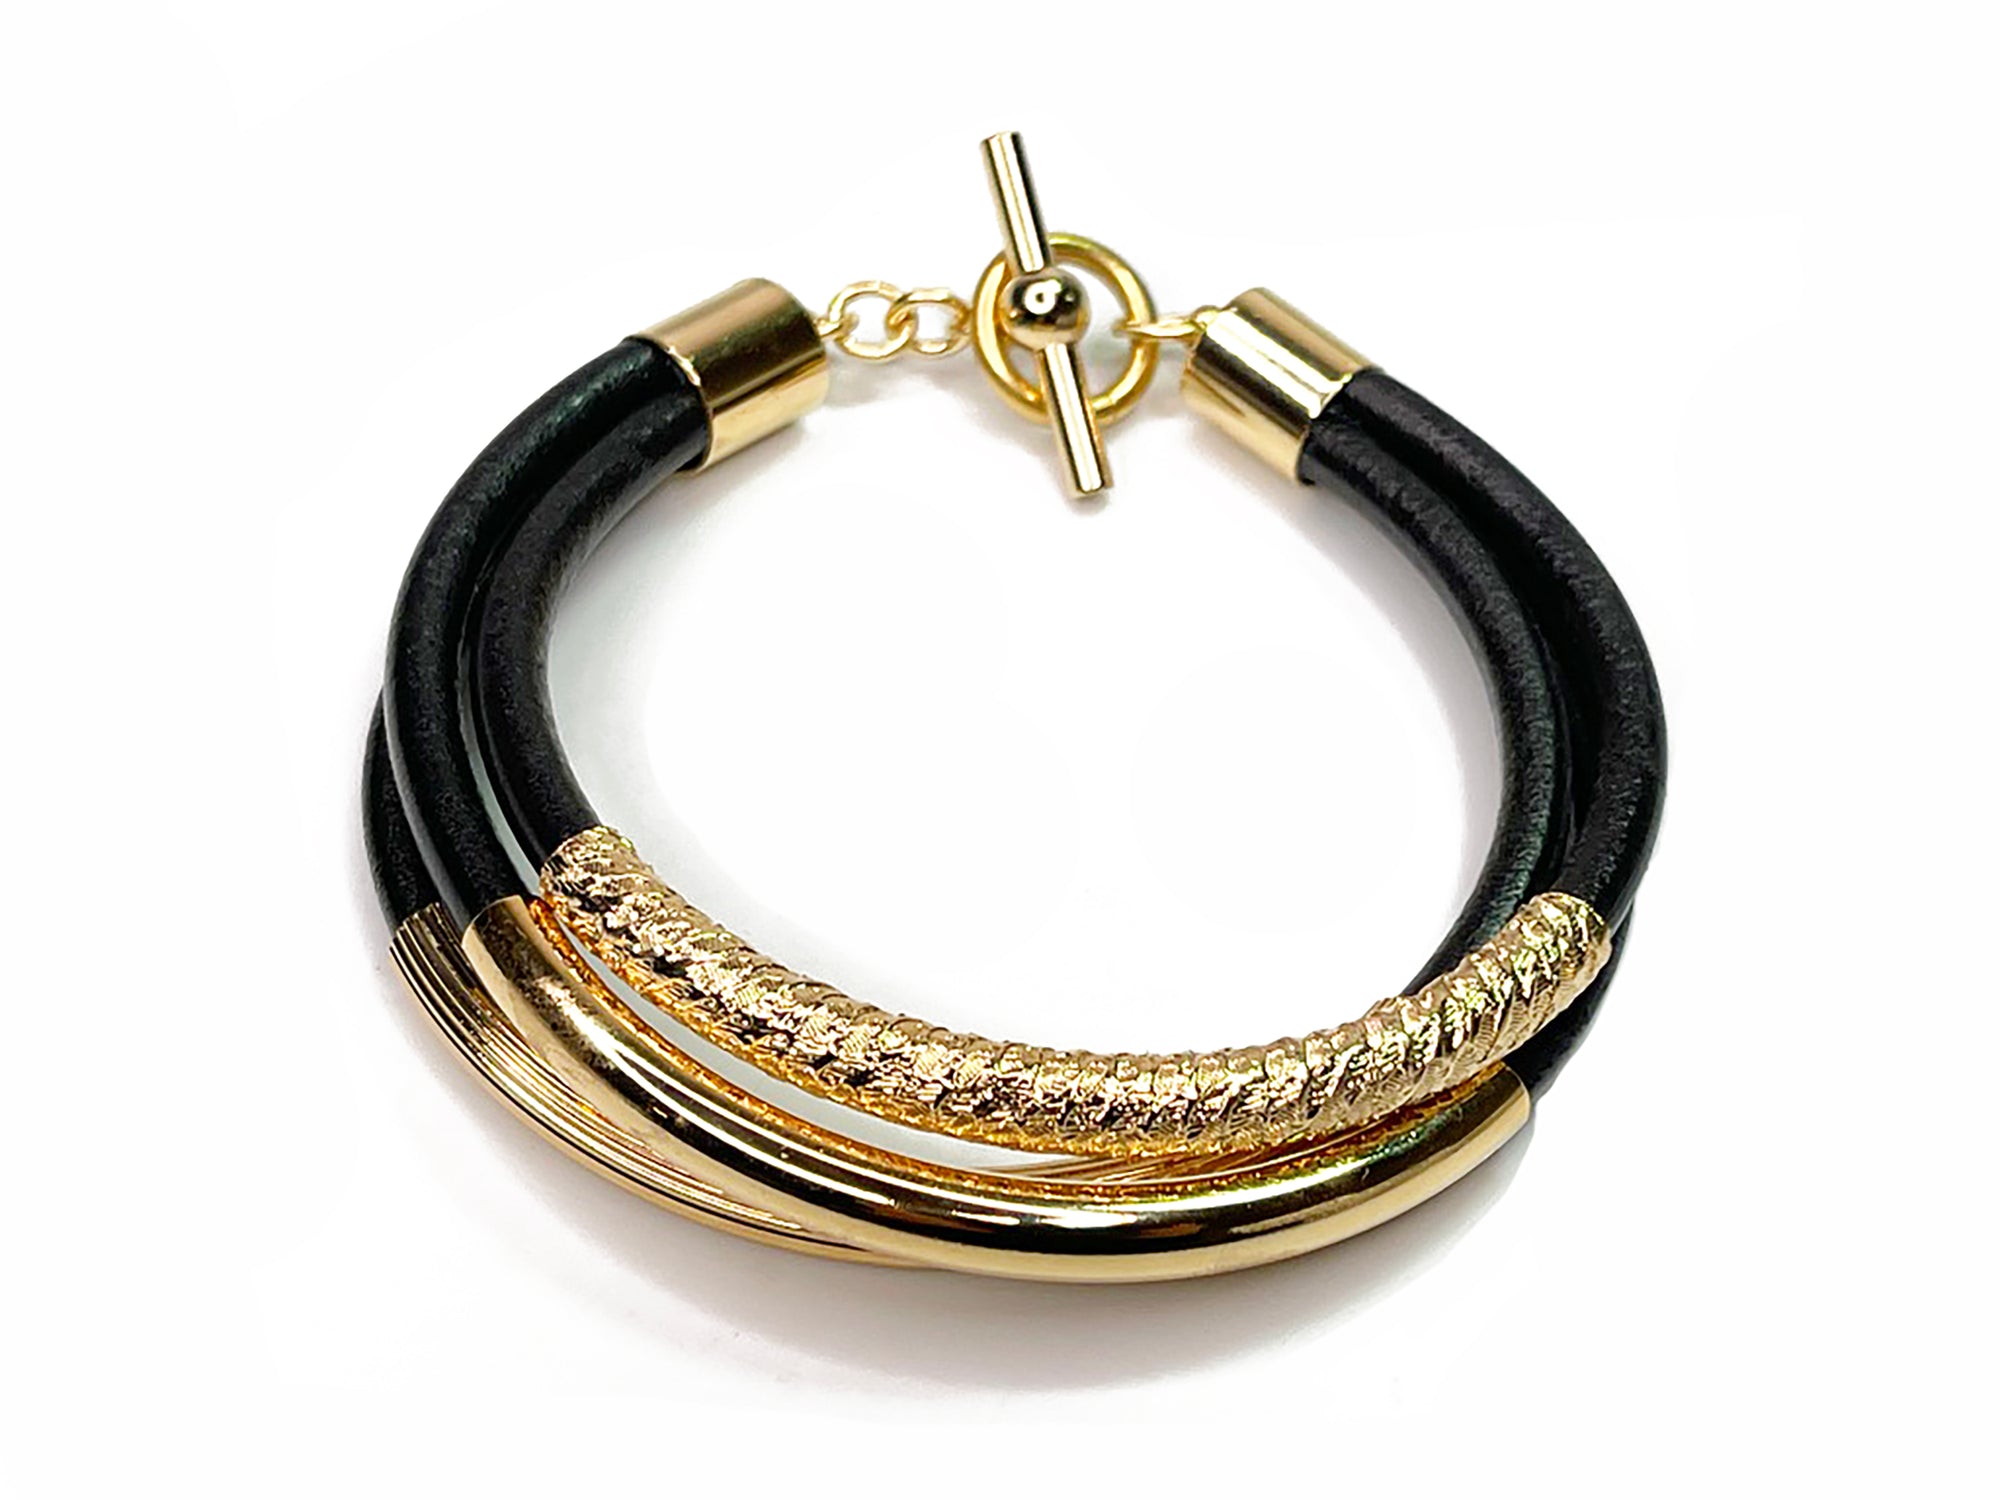 Black Leather Three-Strand Bracelet with Textured Metal Tubes